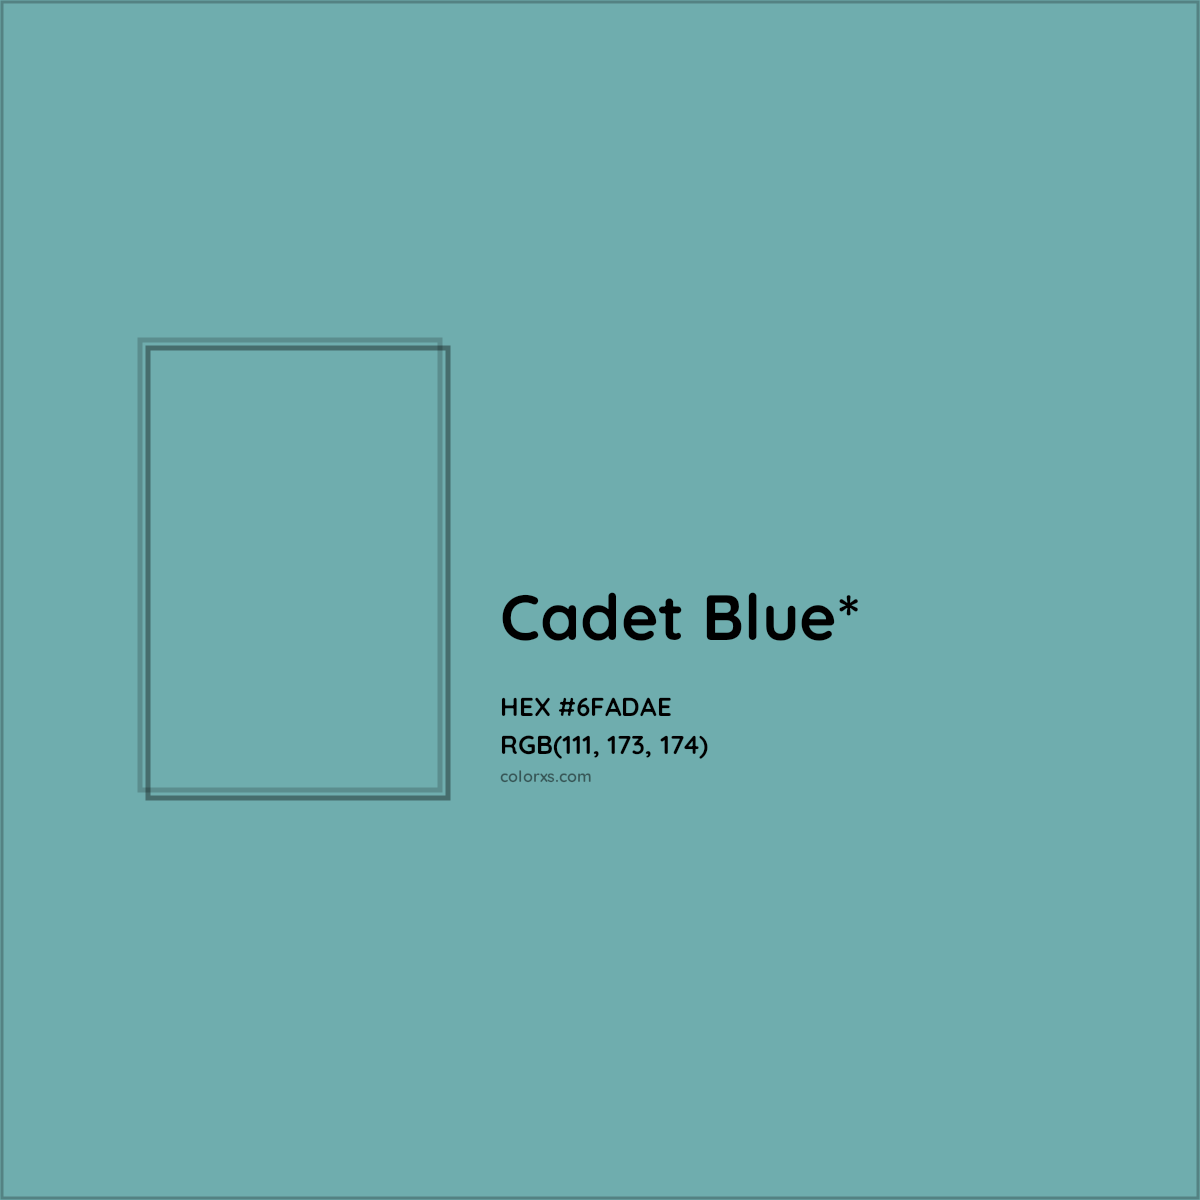 HEX #6FADAE Color Name, Color Code, Palettes, Similar Paints, Images